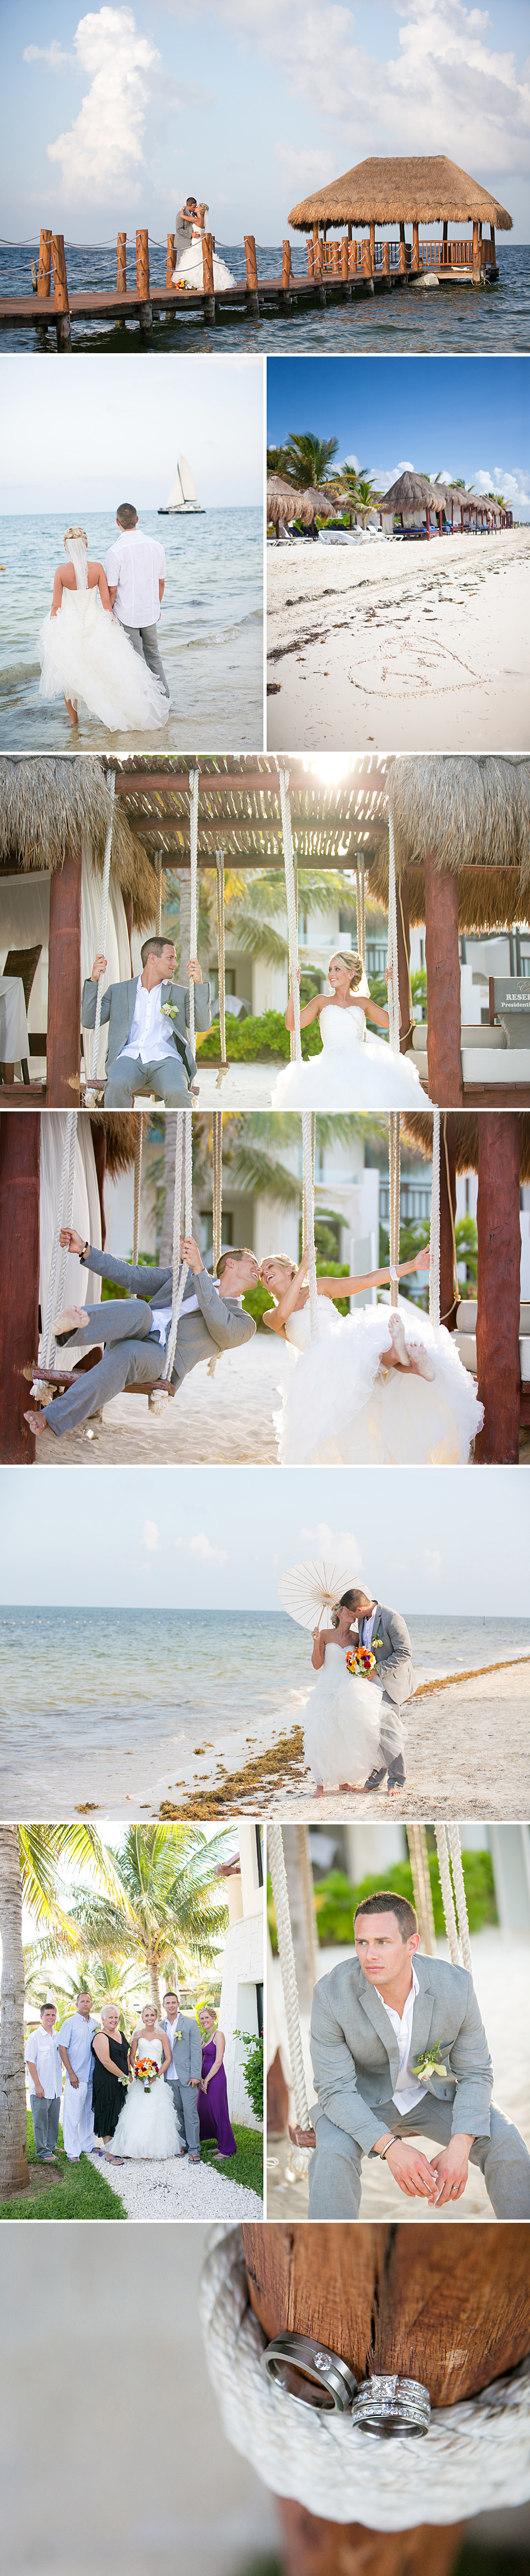 Mexico weddings, Best honey moon resorts, Bride and groom on the beach, Jana Marler